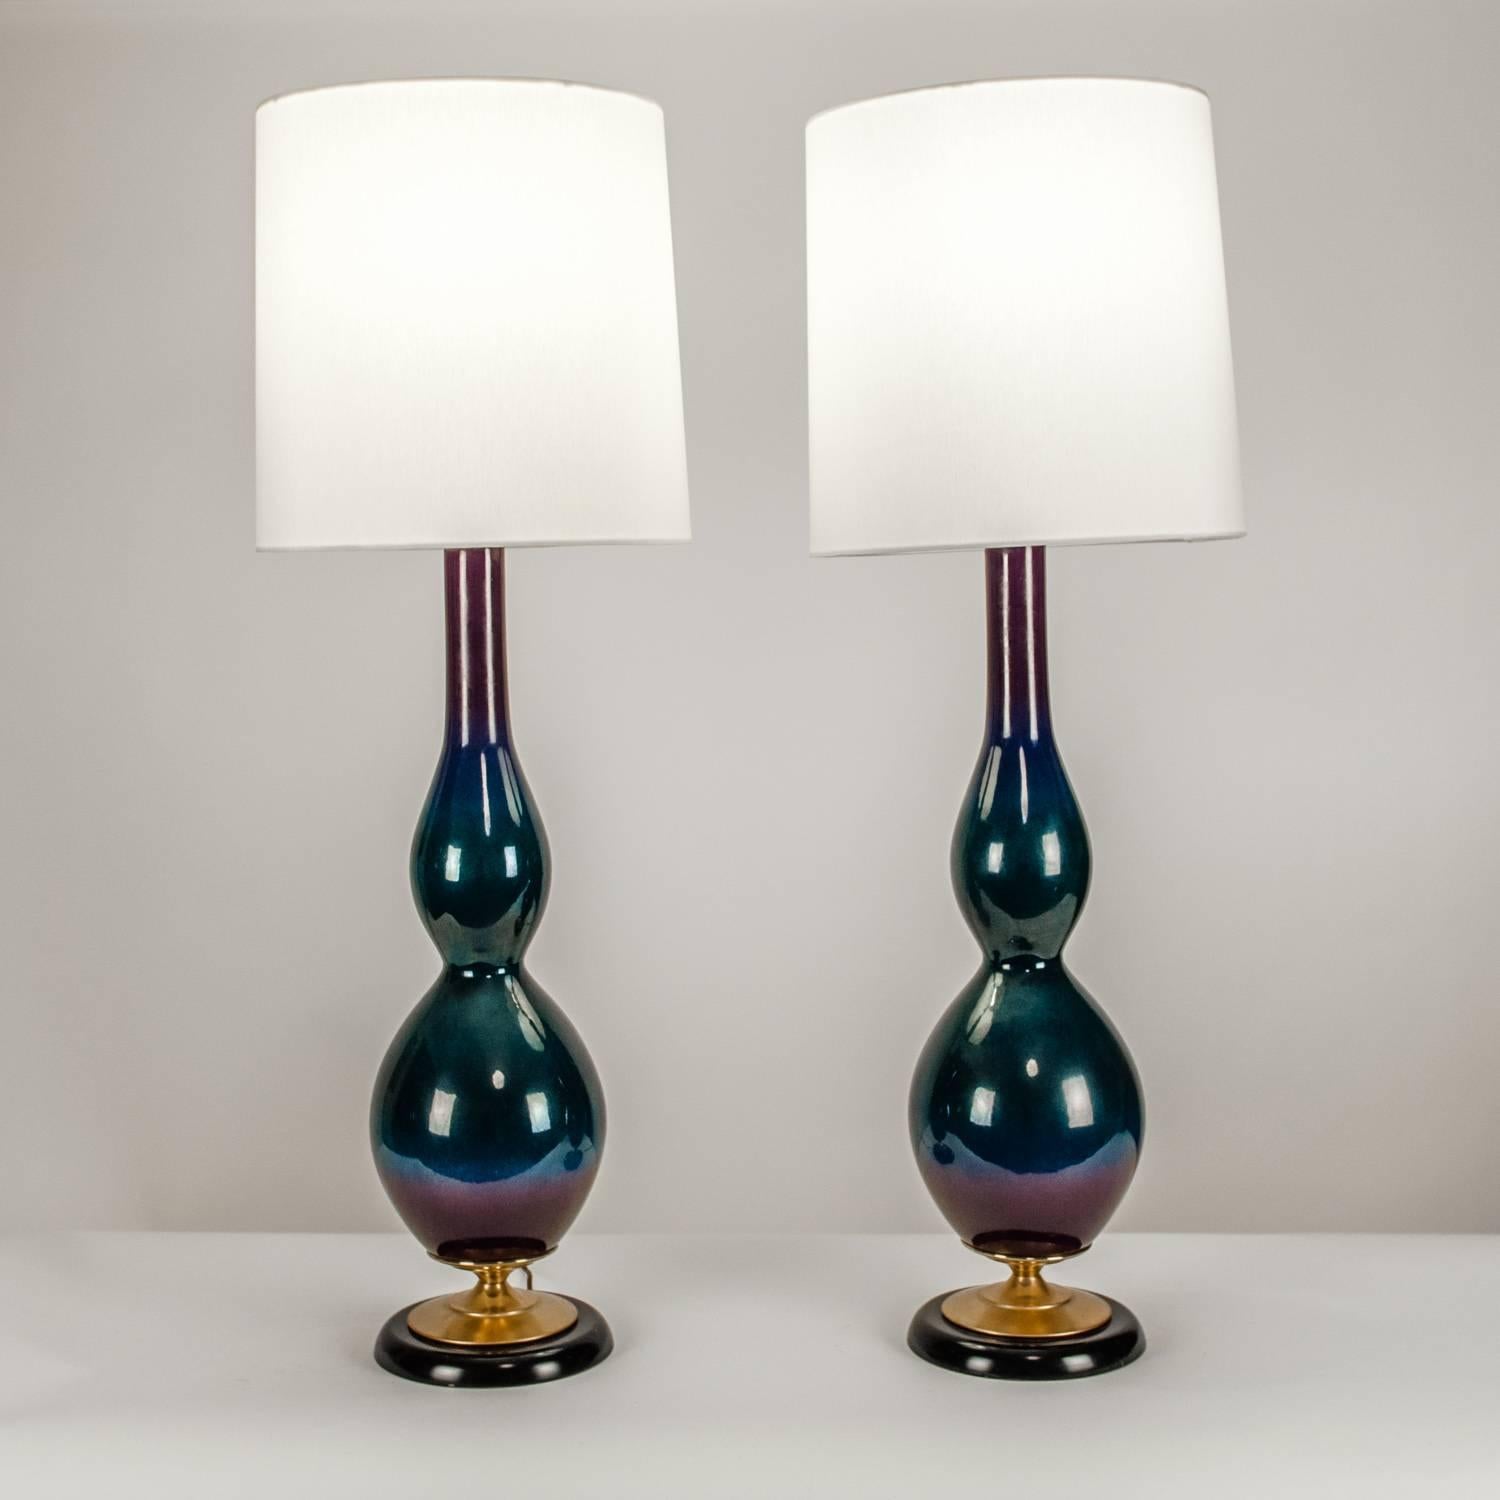 European Pair of Mid-Century Modern Art Deco Porcelain Table Lamps